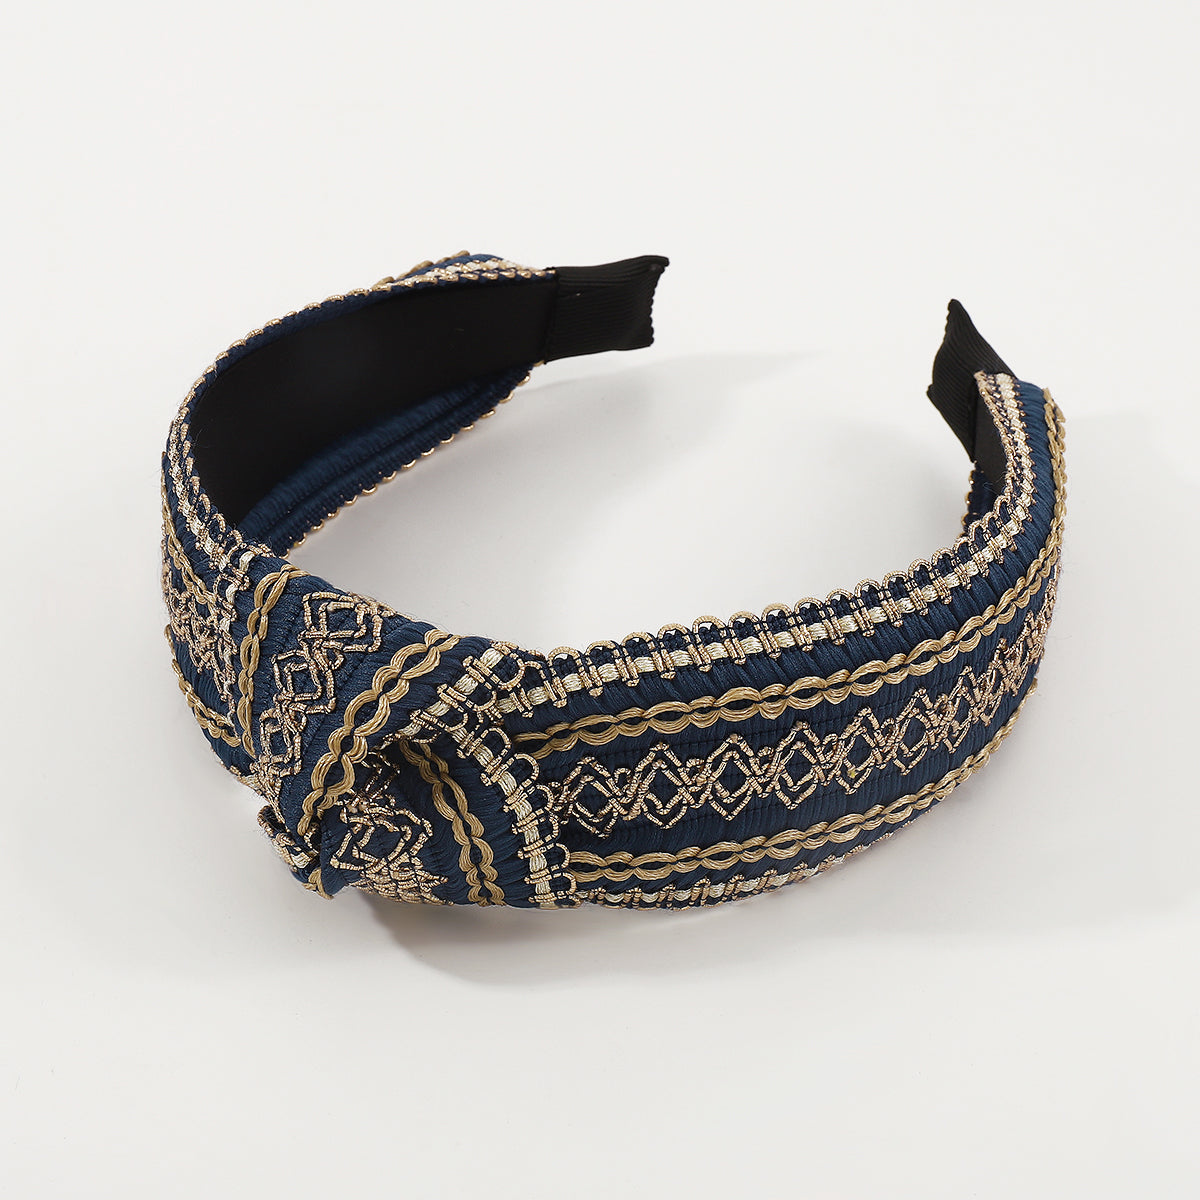 Embroidery Cross Knotted Bezel Headband medyjewelry